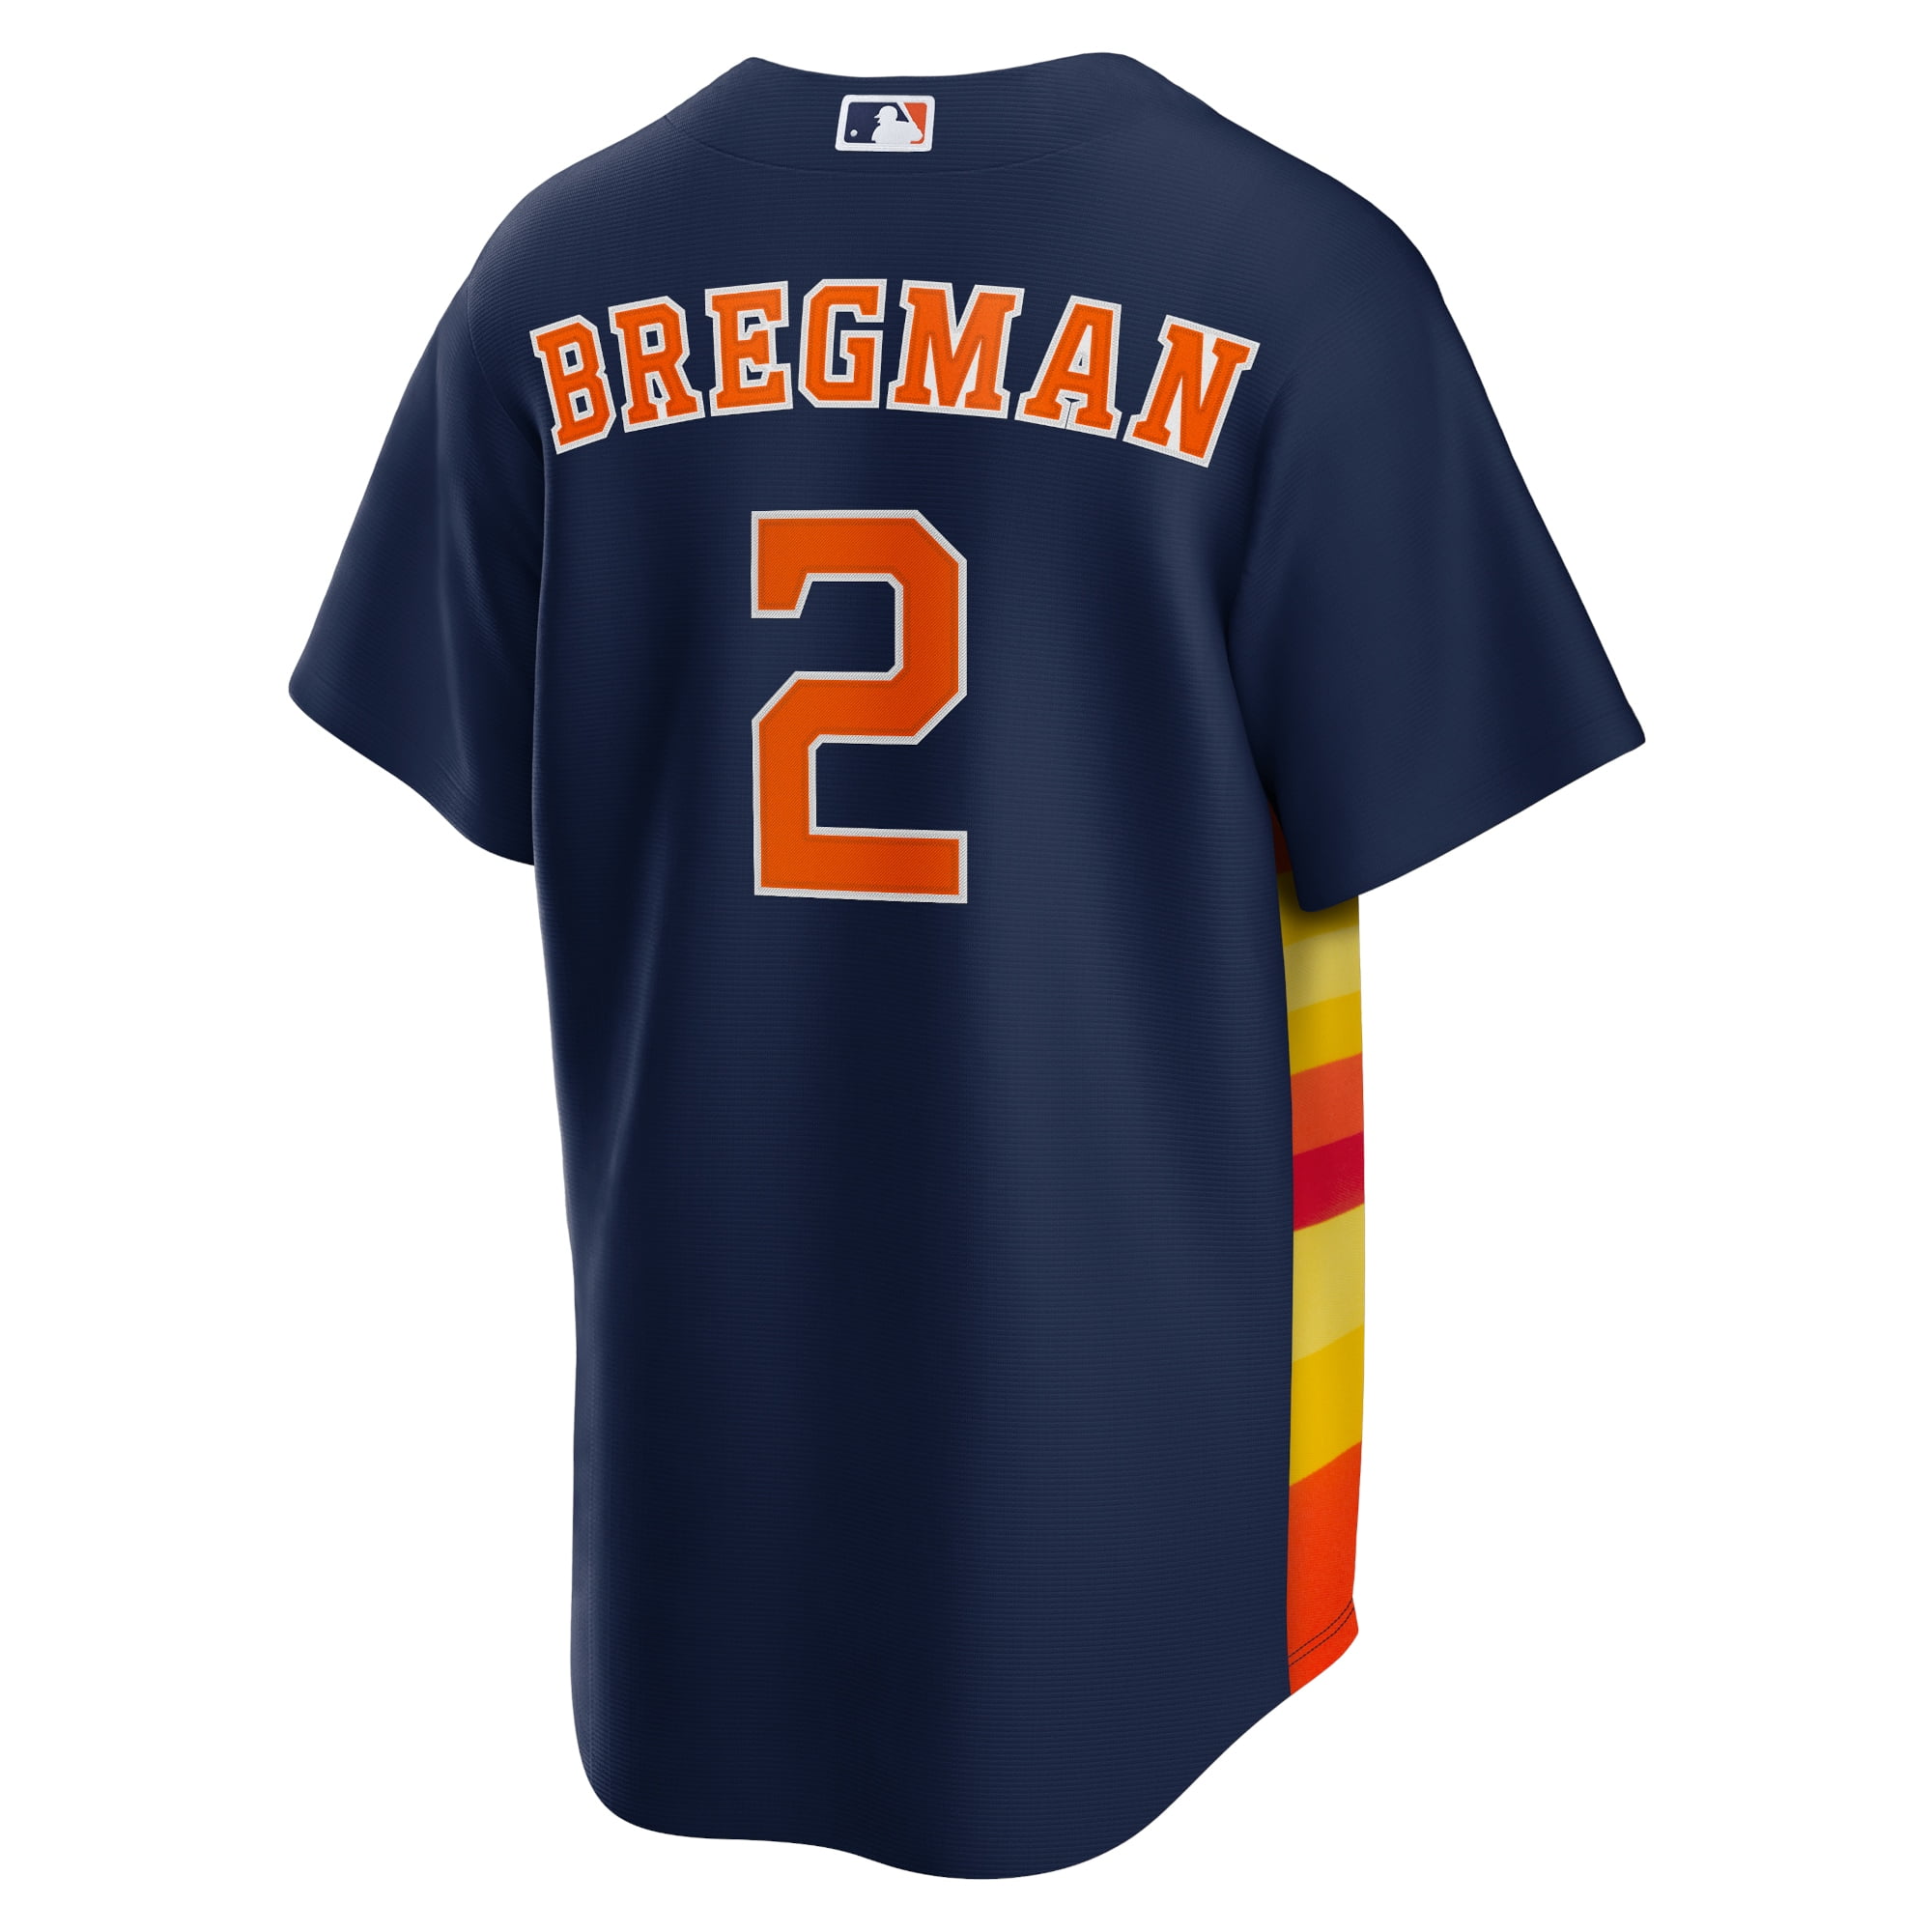 Alex Bregman Astros jersey